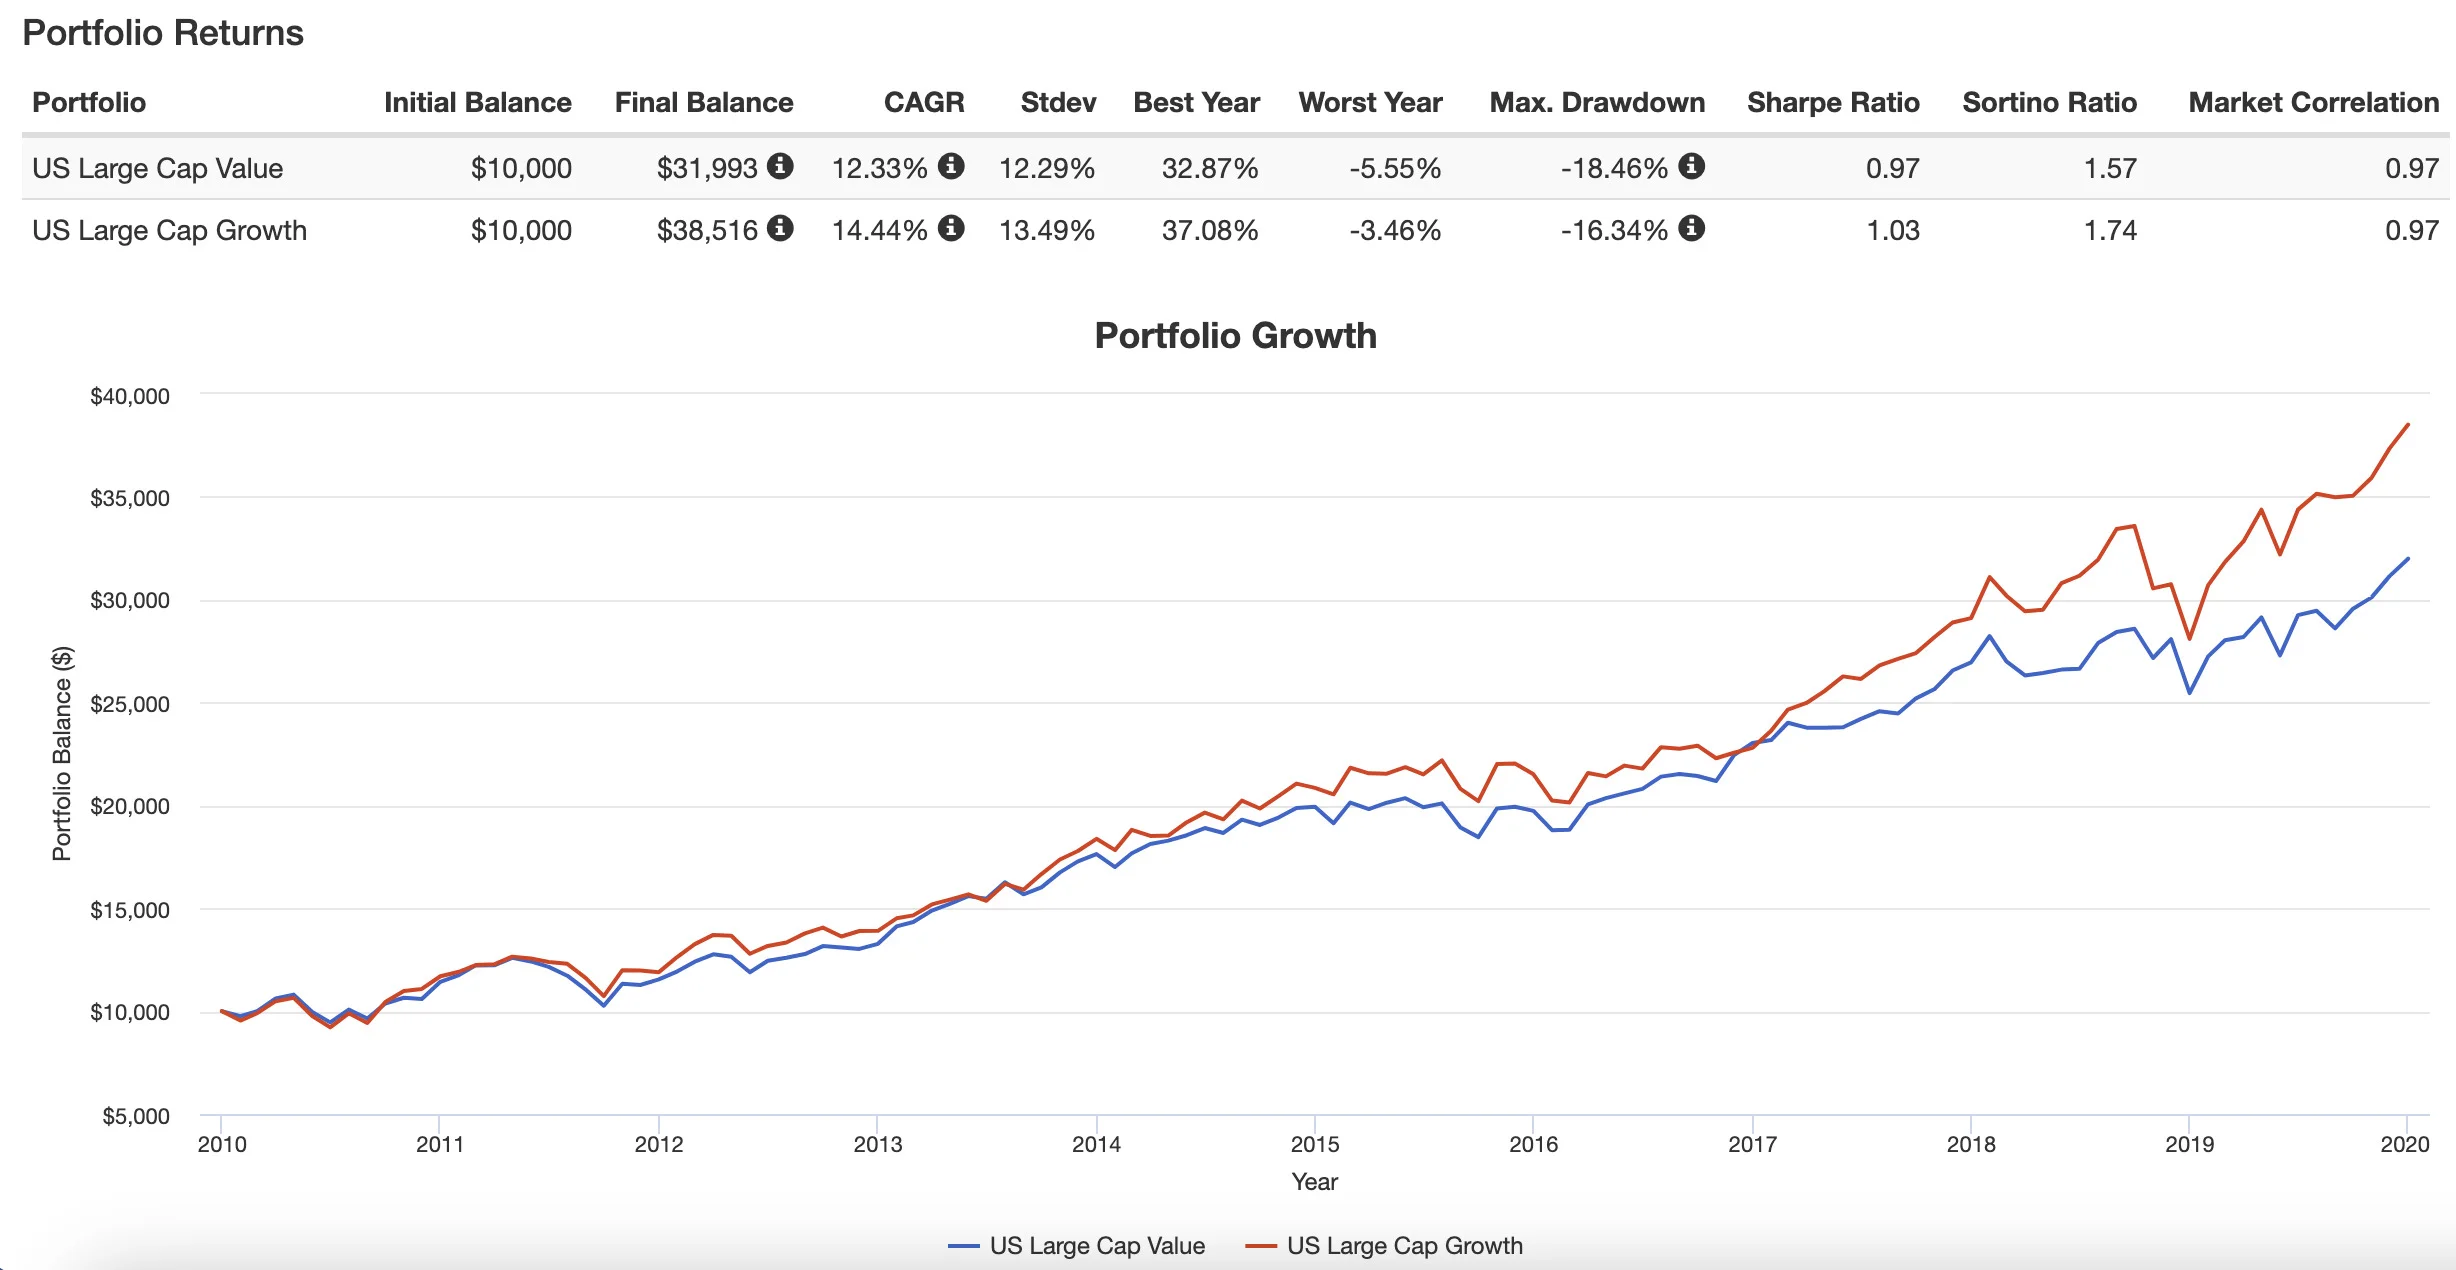 US Large Cap Value stock vs US Large Cap Growth equities portfolio returns in the 2010s